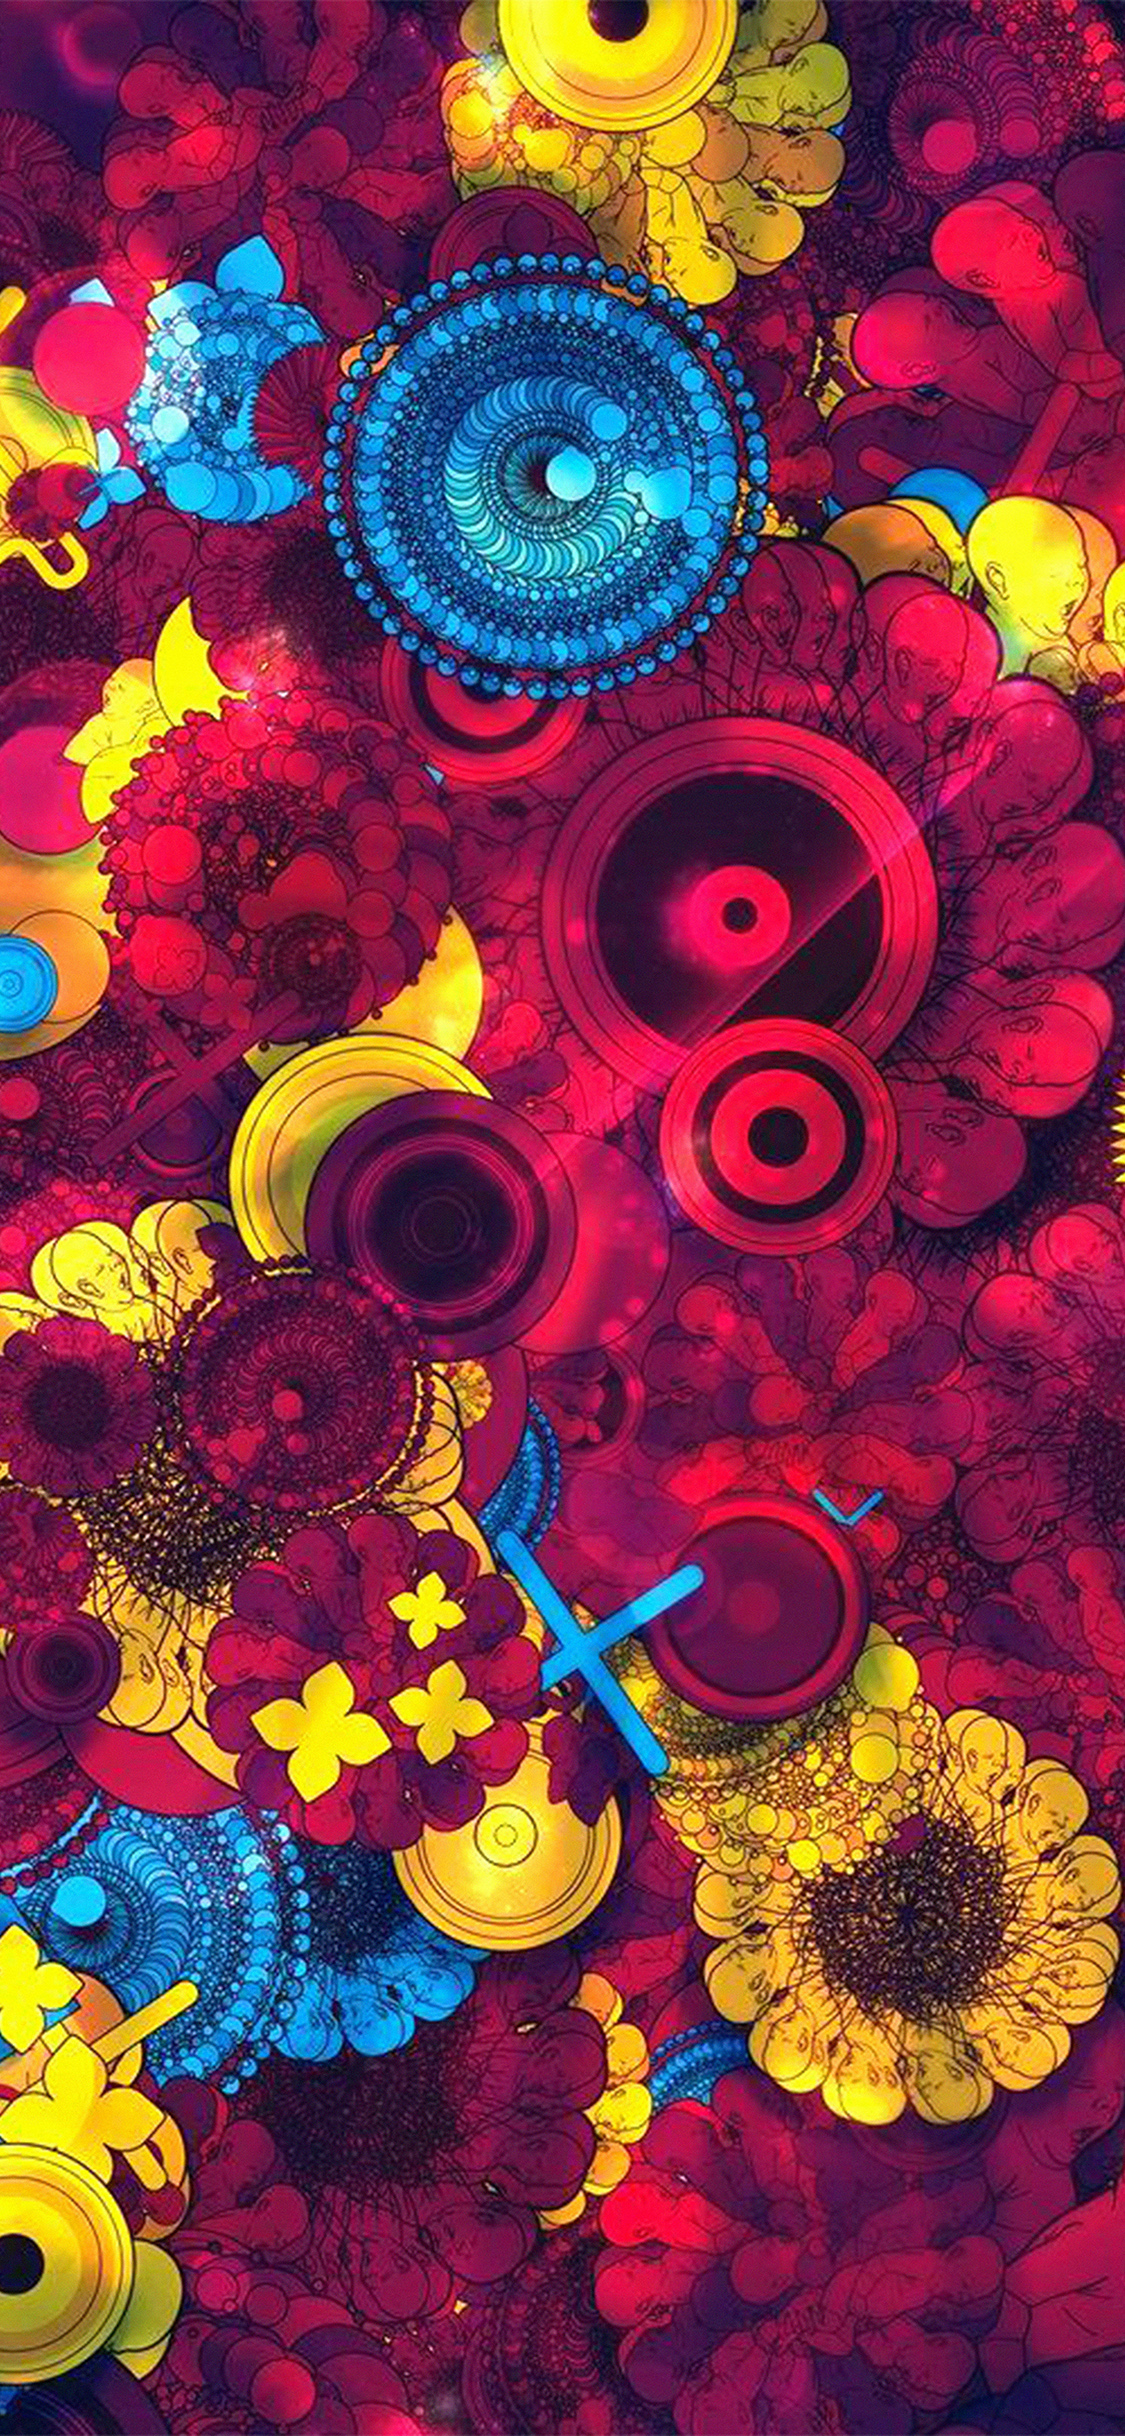 iPhone X wallpaper. abstract art